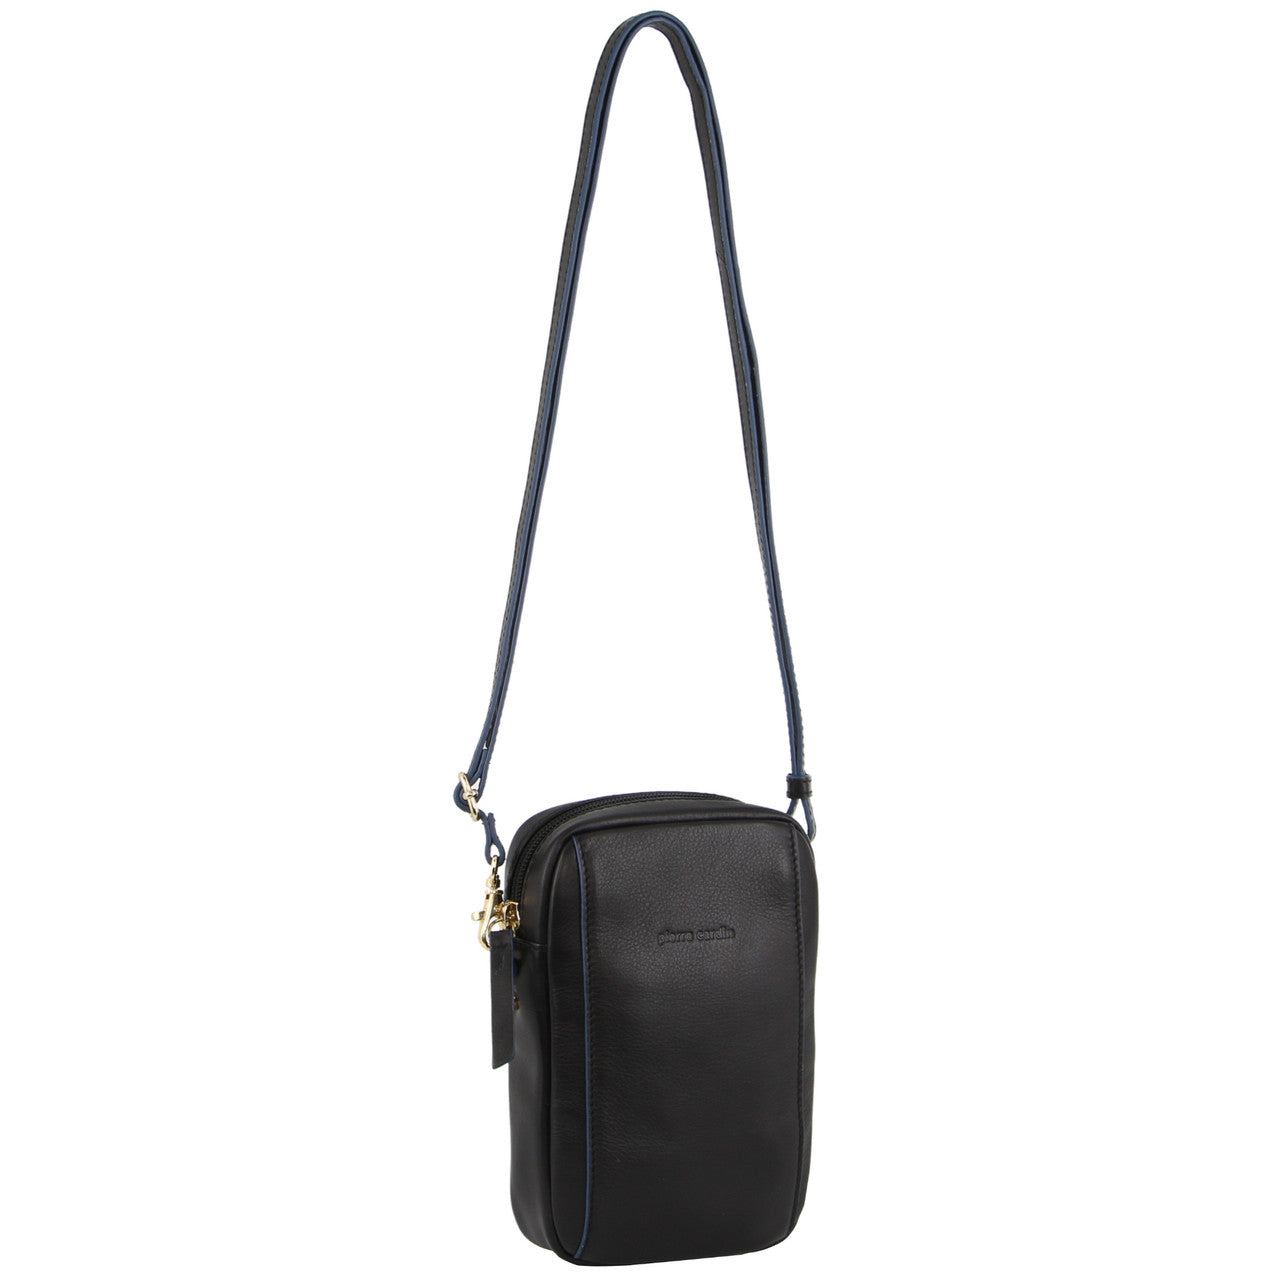 Pierre Cardin 2-tone Urban Leather Cross-Body Bag